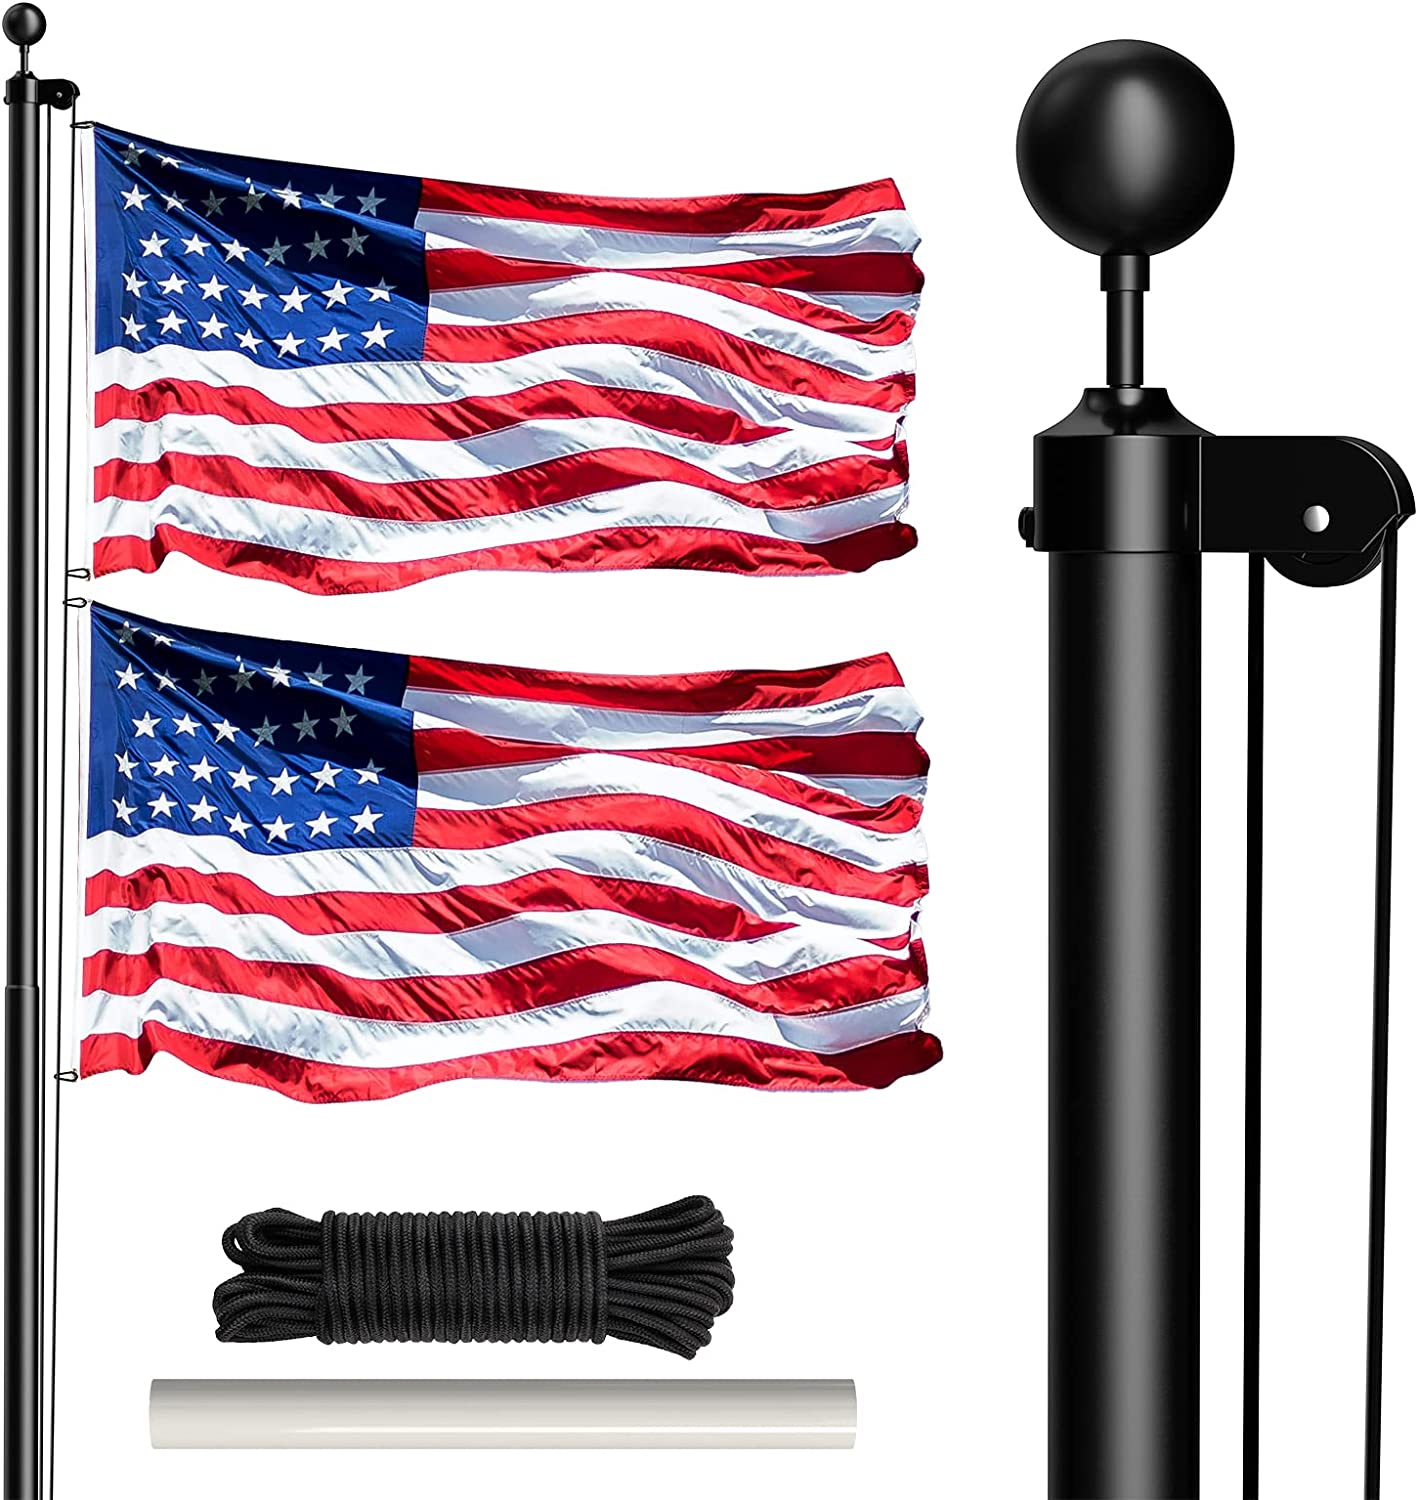 Flag Pole Kit WholeSale - Price List, Bulk Buy at